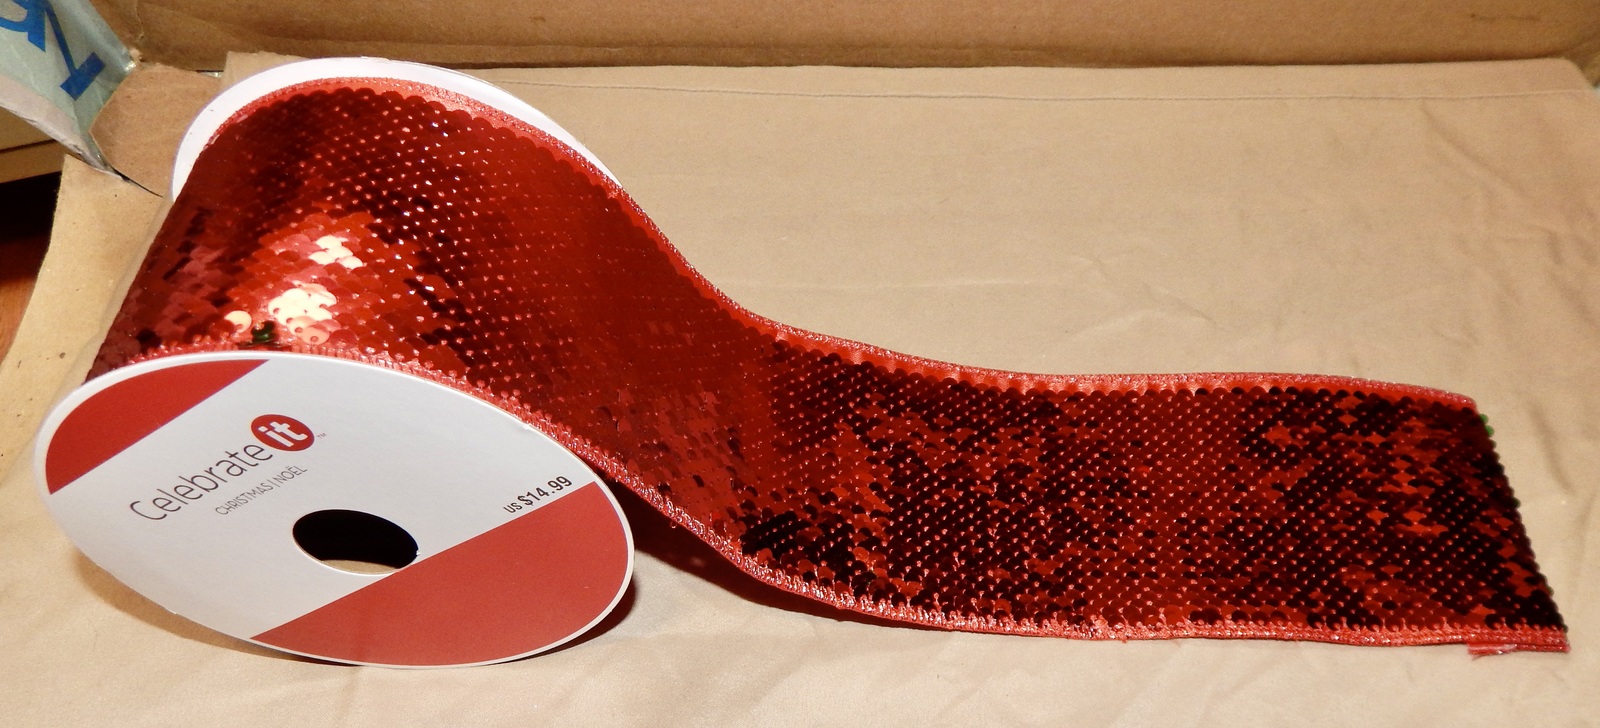 Metallic Red Mesh Wired Ribbon, 1-1/2x25 Yards